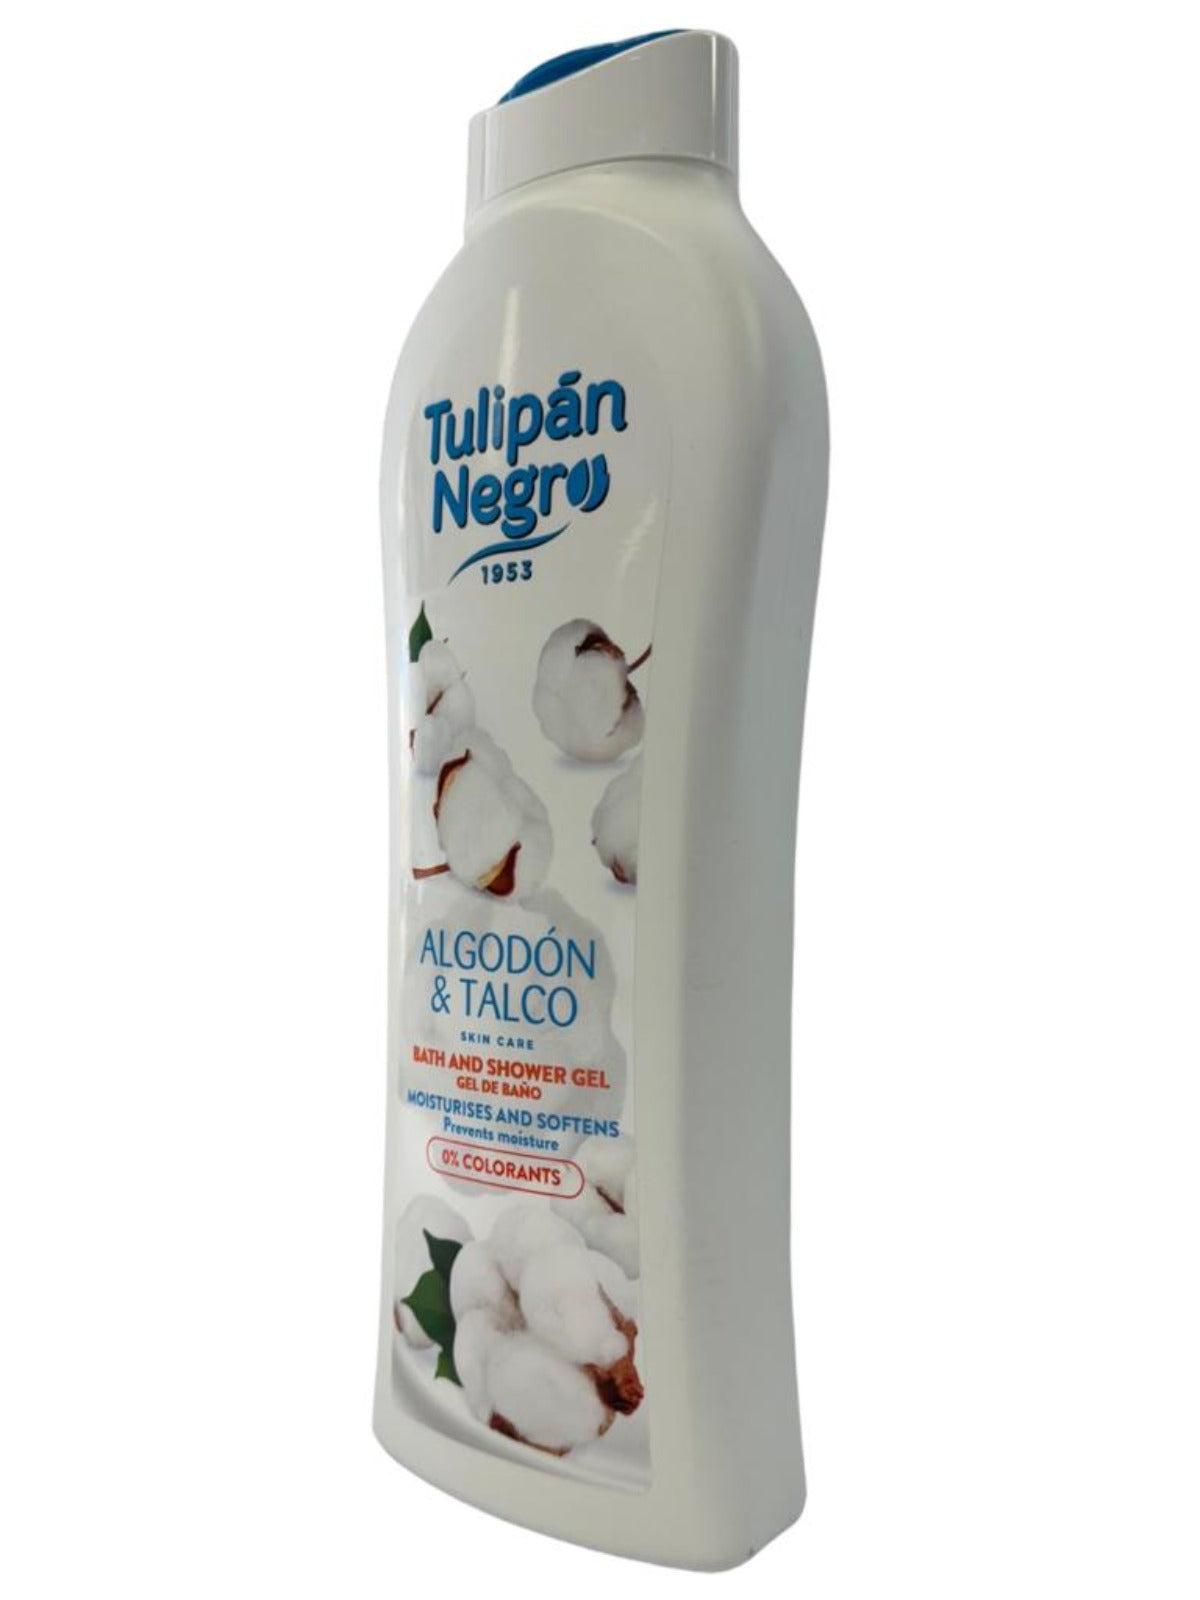 Tulipan Negro Algodon & Talco Spanish Bath And Shower Gel 650ml